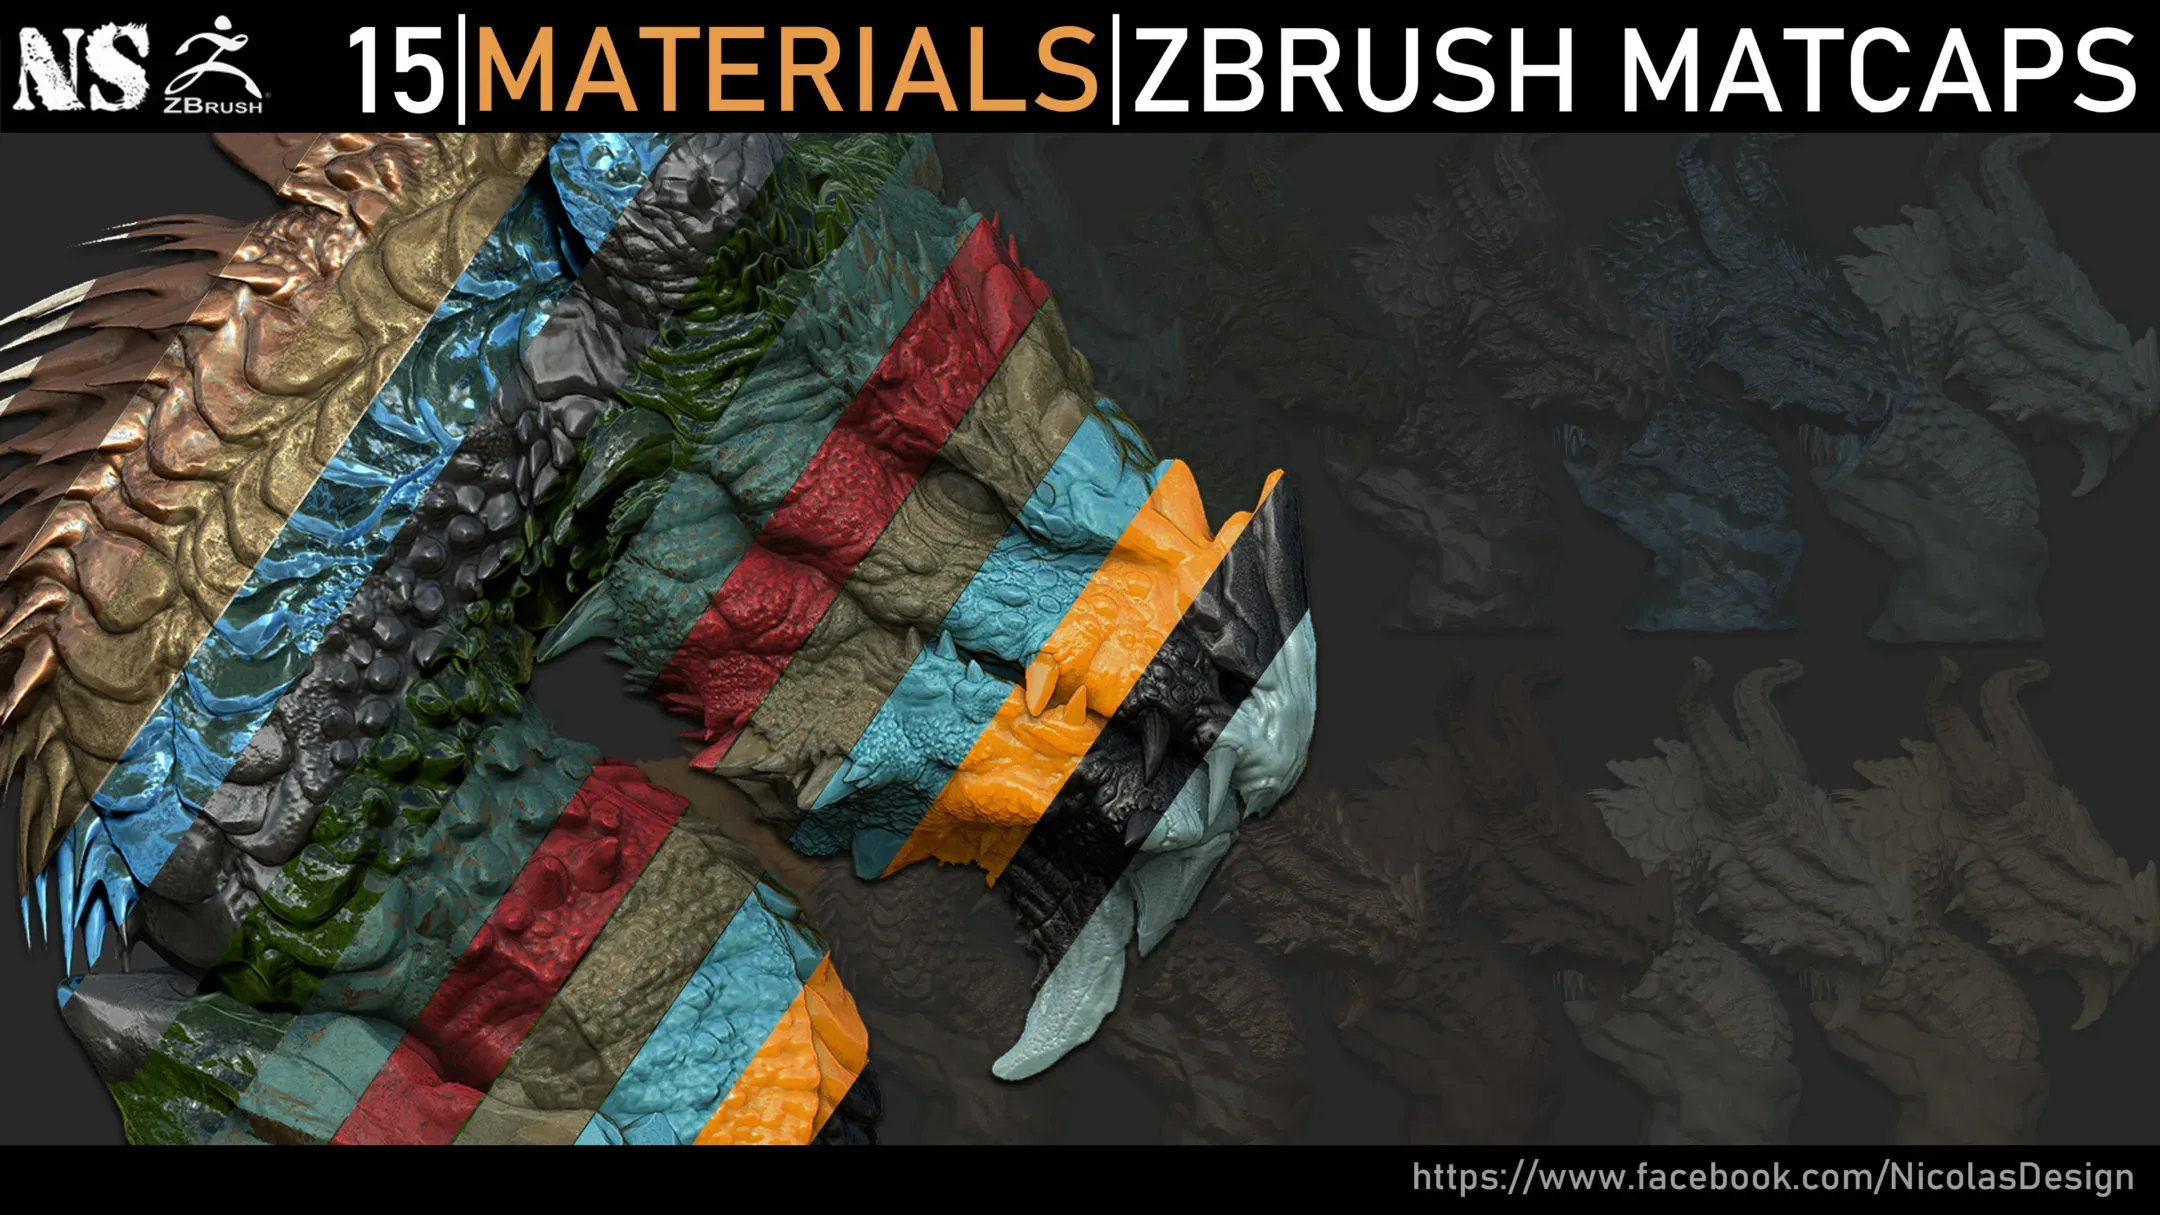 Zbrush - Materials Zbrush Matcaps